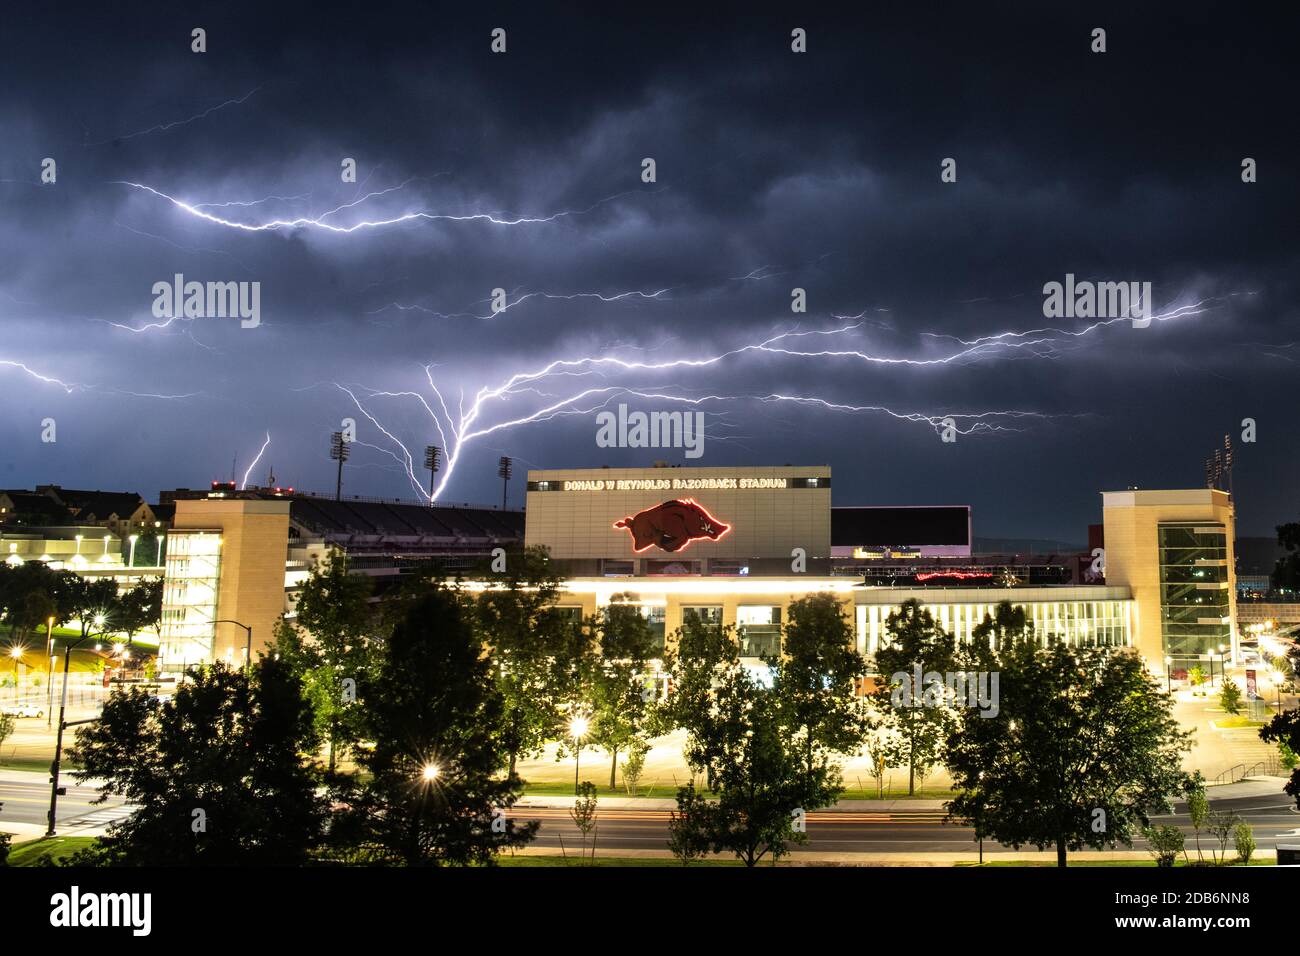 Fulmini colpisce dietro Donald W. Reynolds Razorback Stadium Sabato 11 luglio 2020 a Fayetteville, Arkansas. Foto Stock